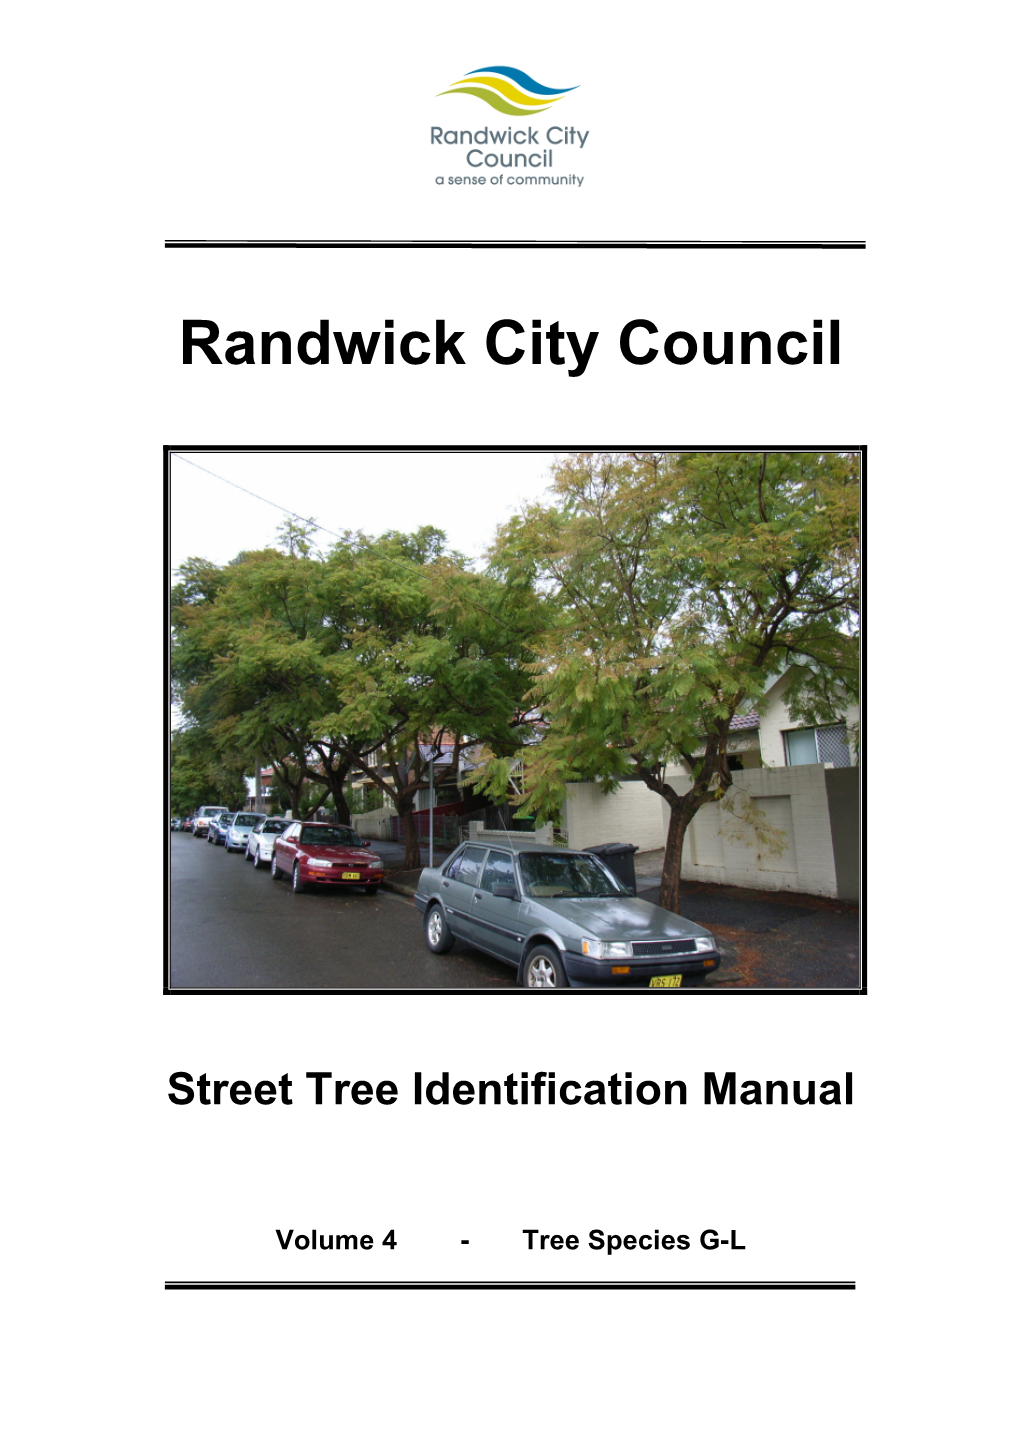 Street Tree Identification Manual